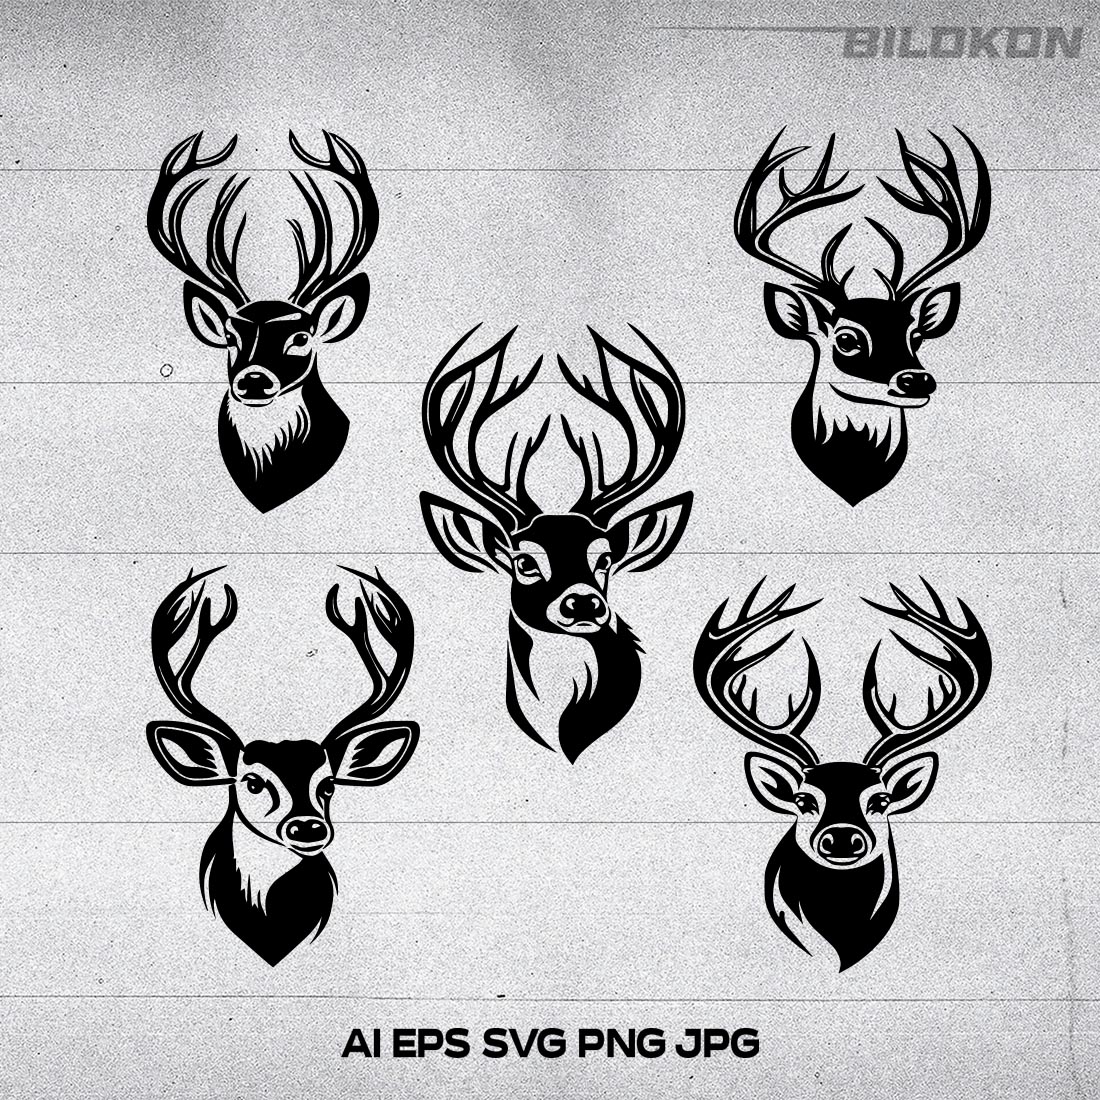 Deer head logo, deer head icon, SVG Vector illustration cover image.